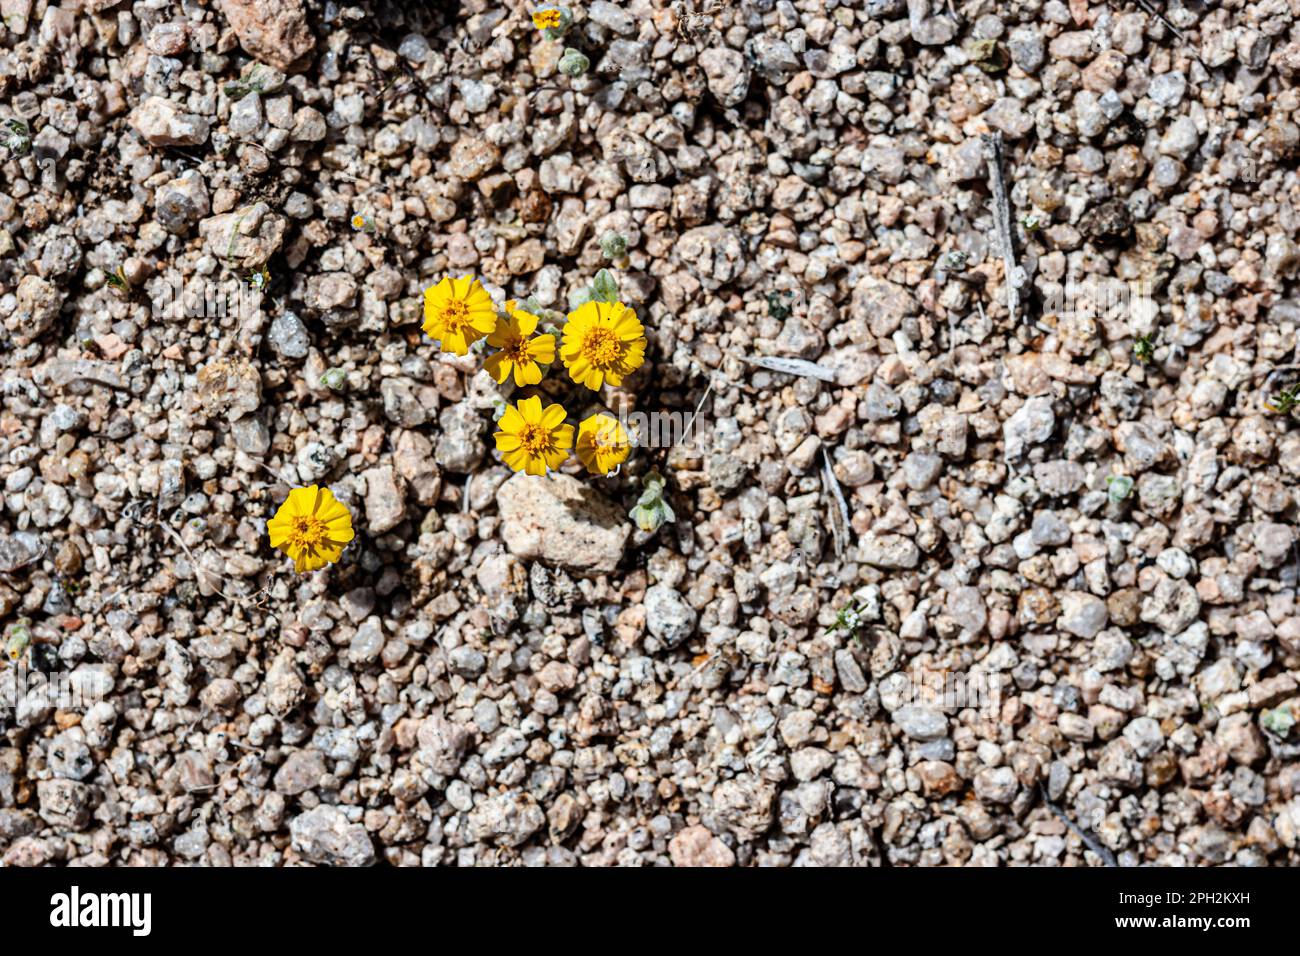 Woolly daisy flower found in the California desert Stock Photo